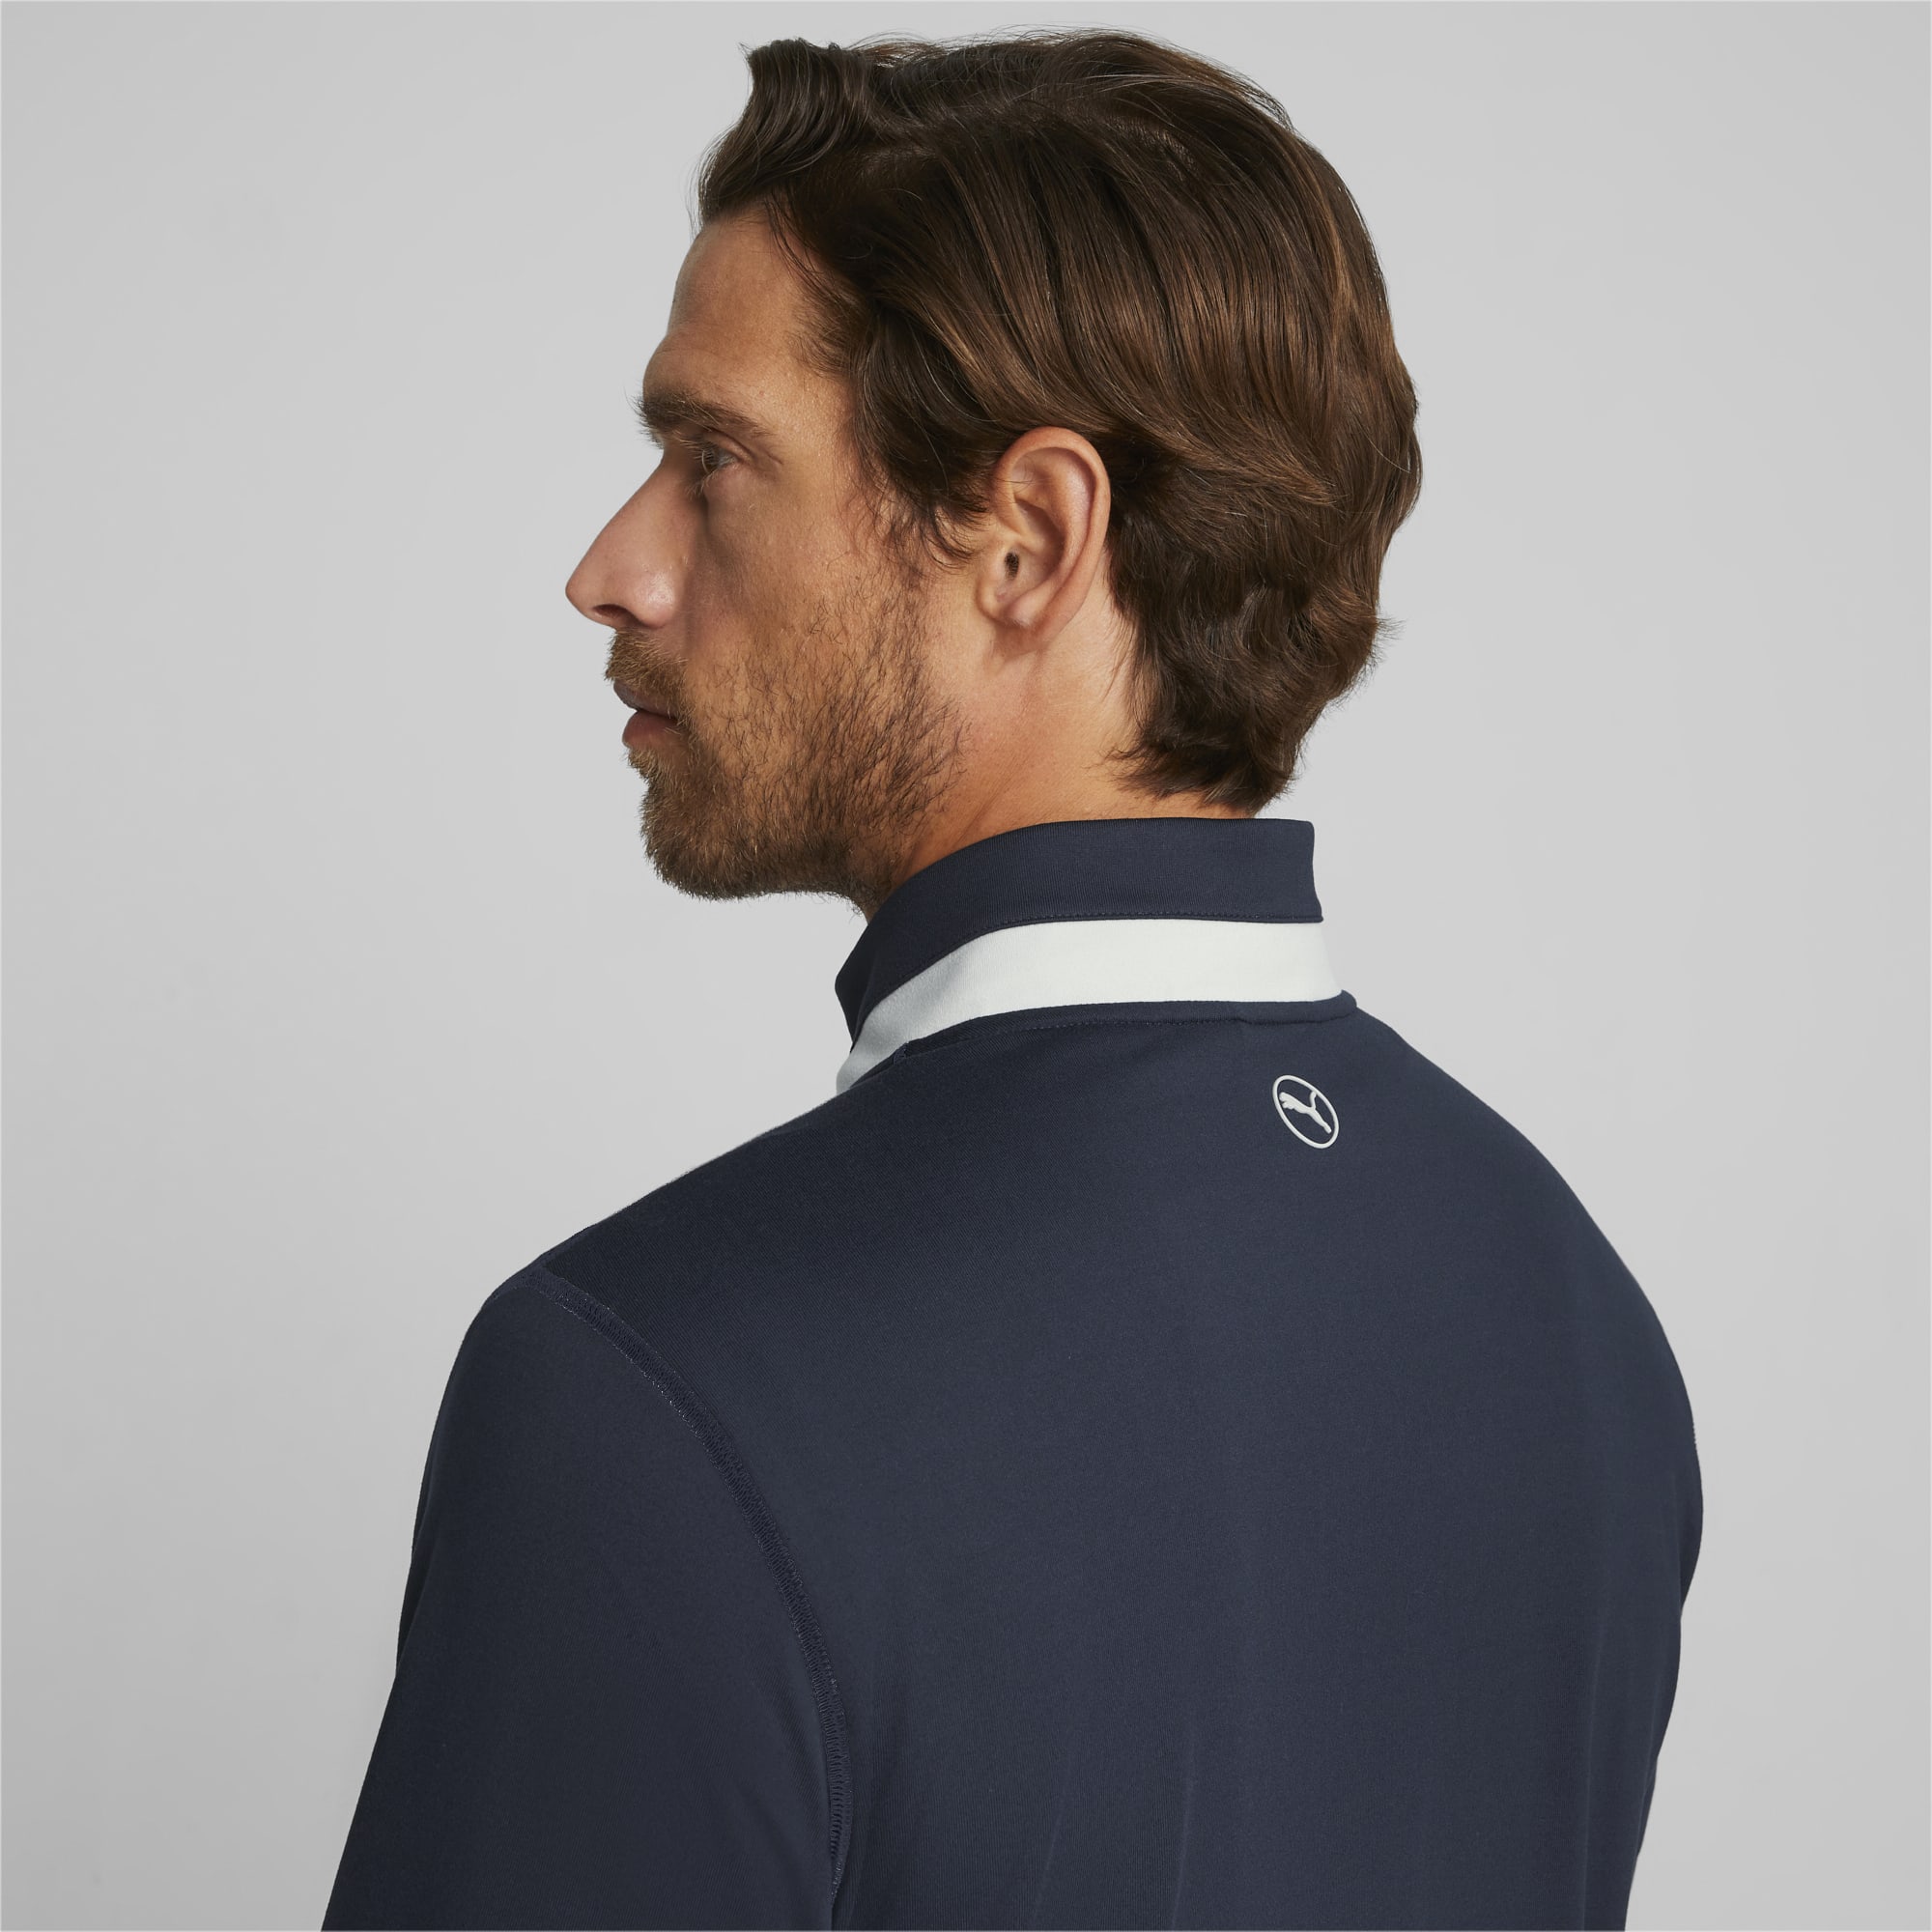 PUMA Men's Lightweight Golf Pullover Top, Dark Blue, Size S, Clothing